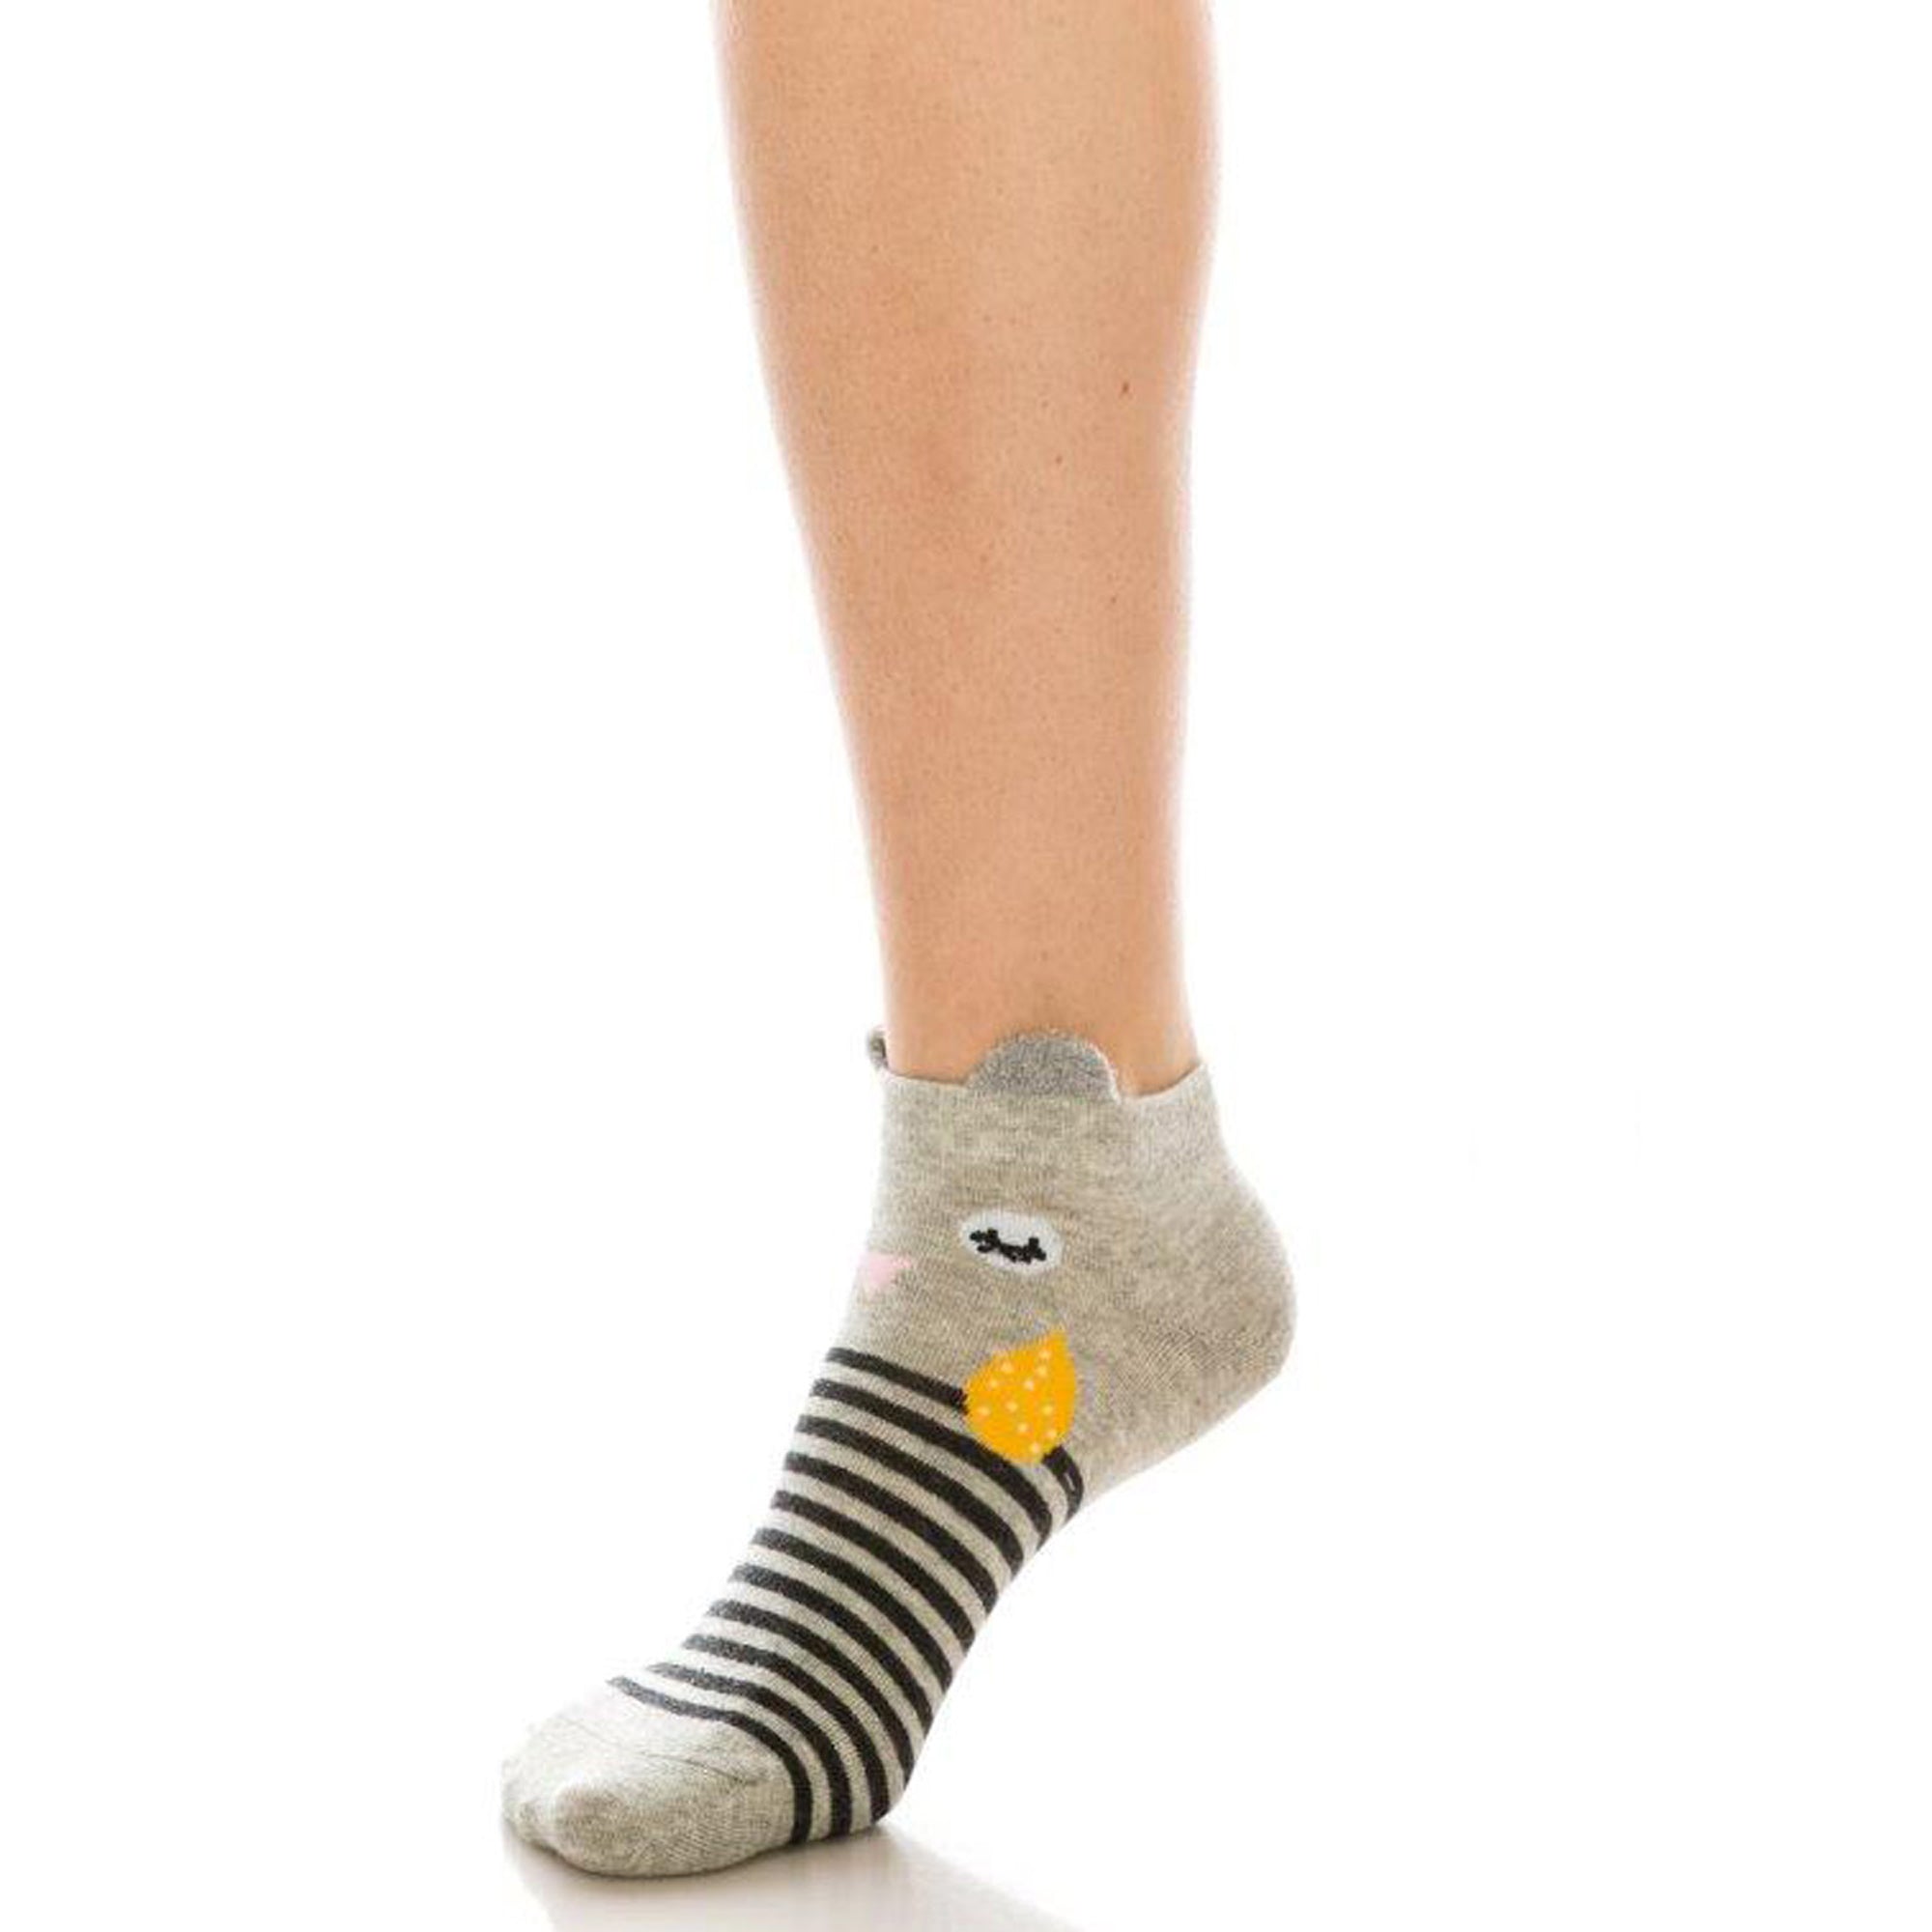 Fashionazzle Women's Socks Animal Printed Cotton Ankle Socks (6 Pack)